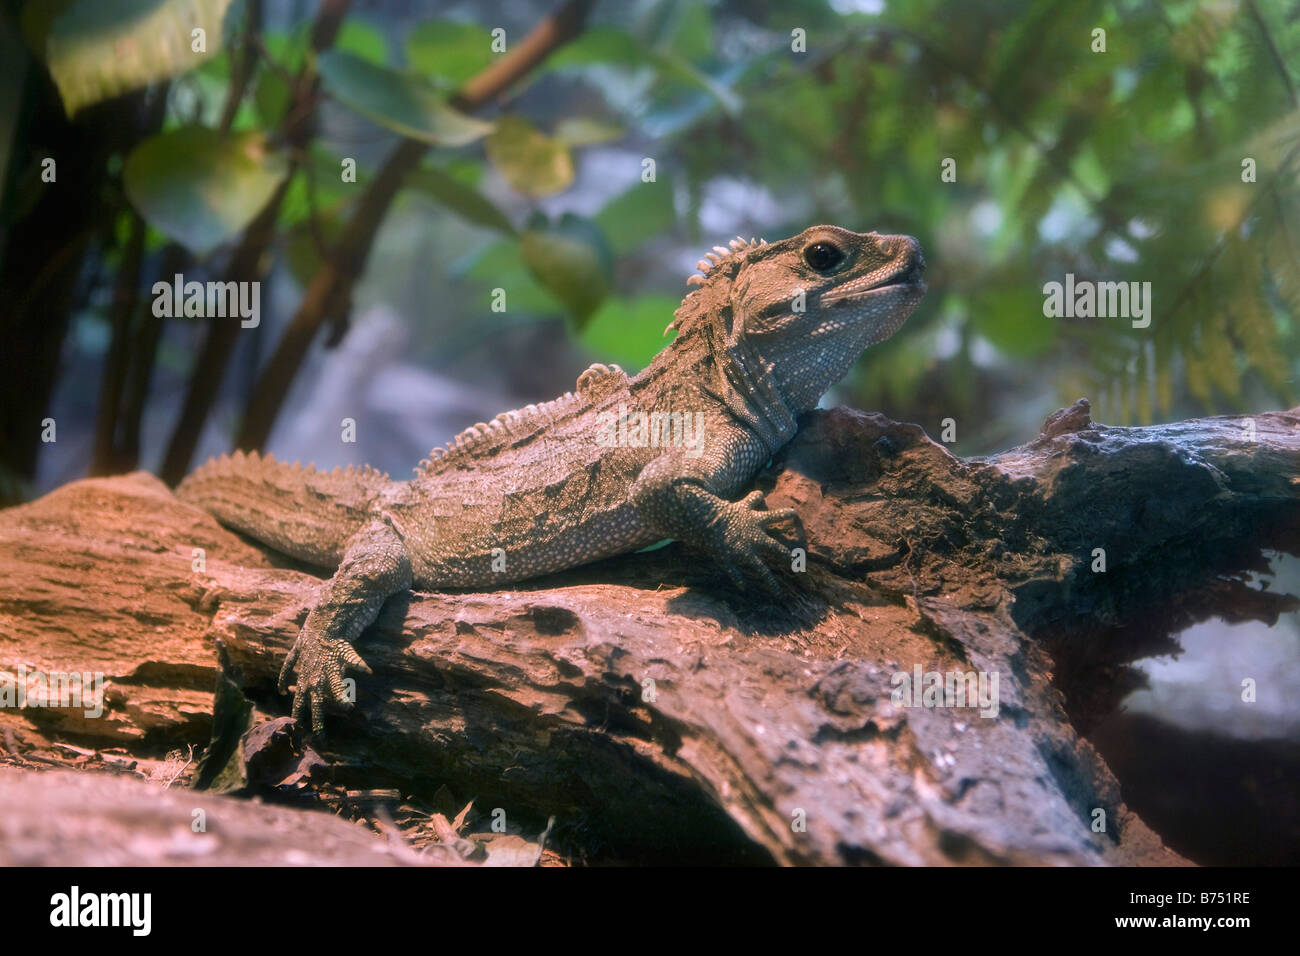 Snapshots of Nature: Long Island Lizards